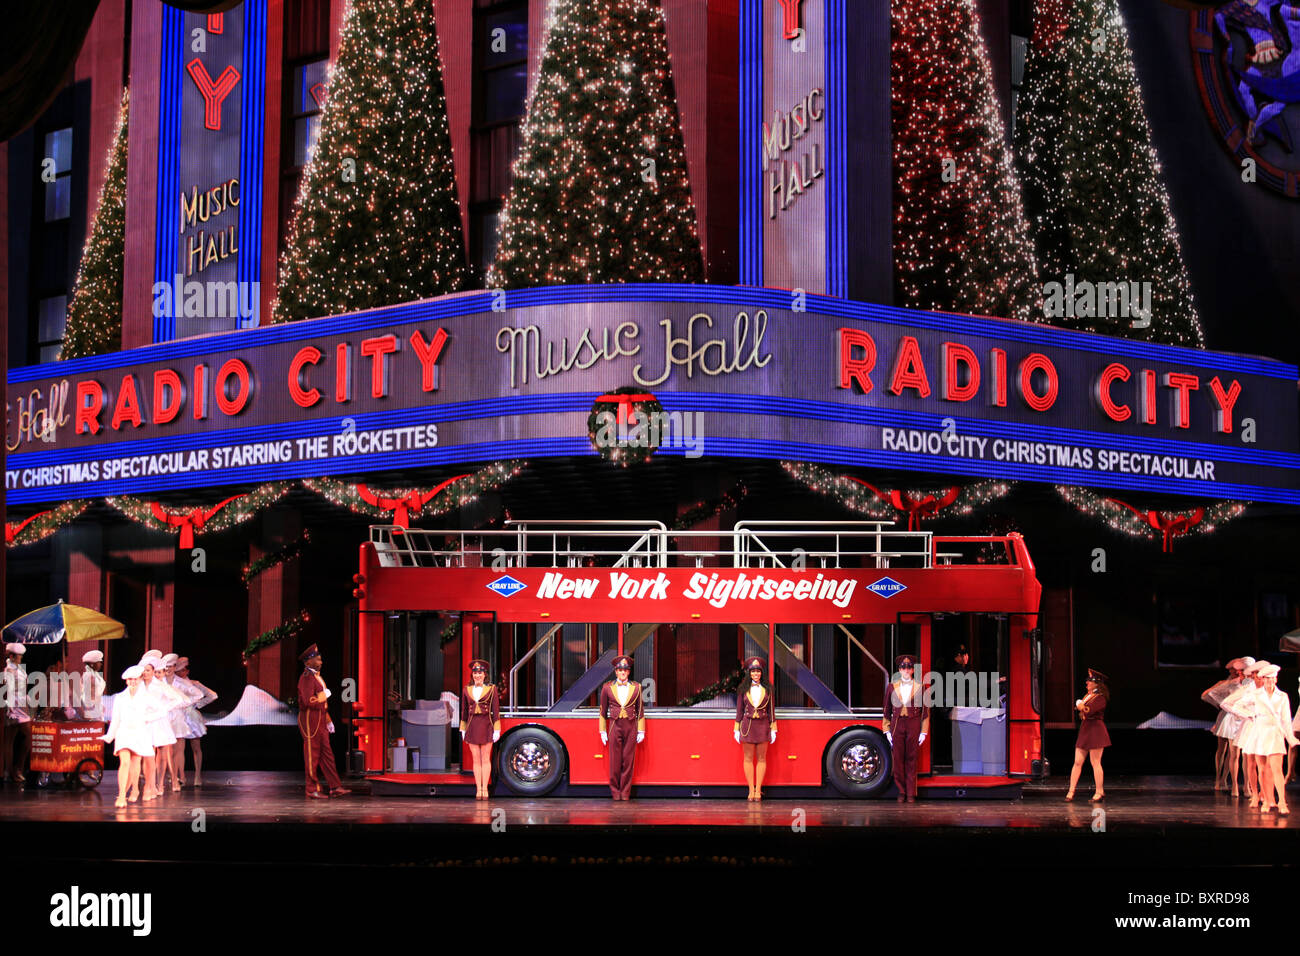 radio city music hall christmas spectacular new york - DriverLayer Search Engine